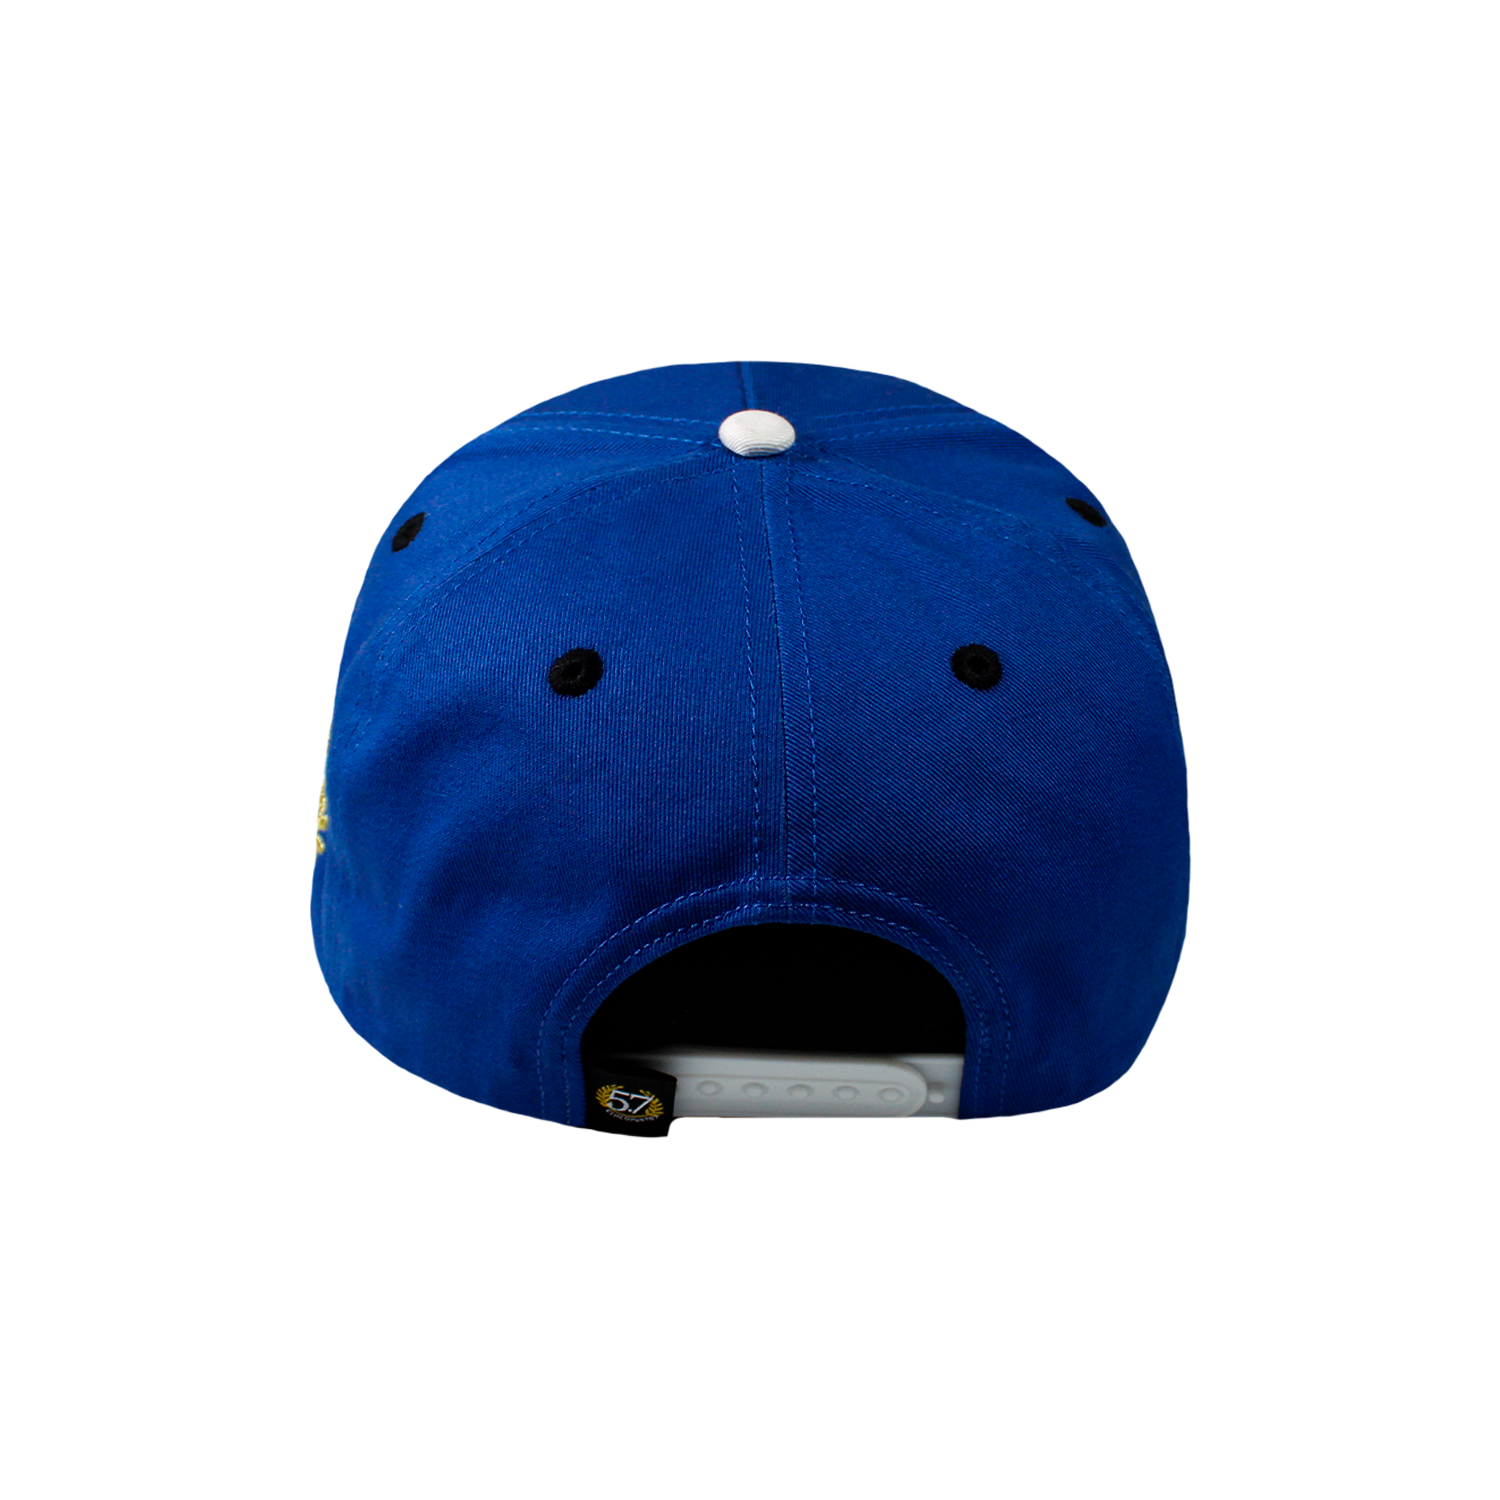 Gallo Béisbol World Series Blue Premium